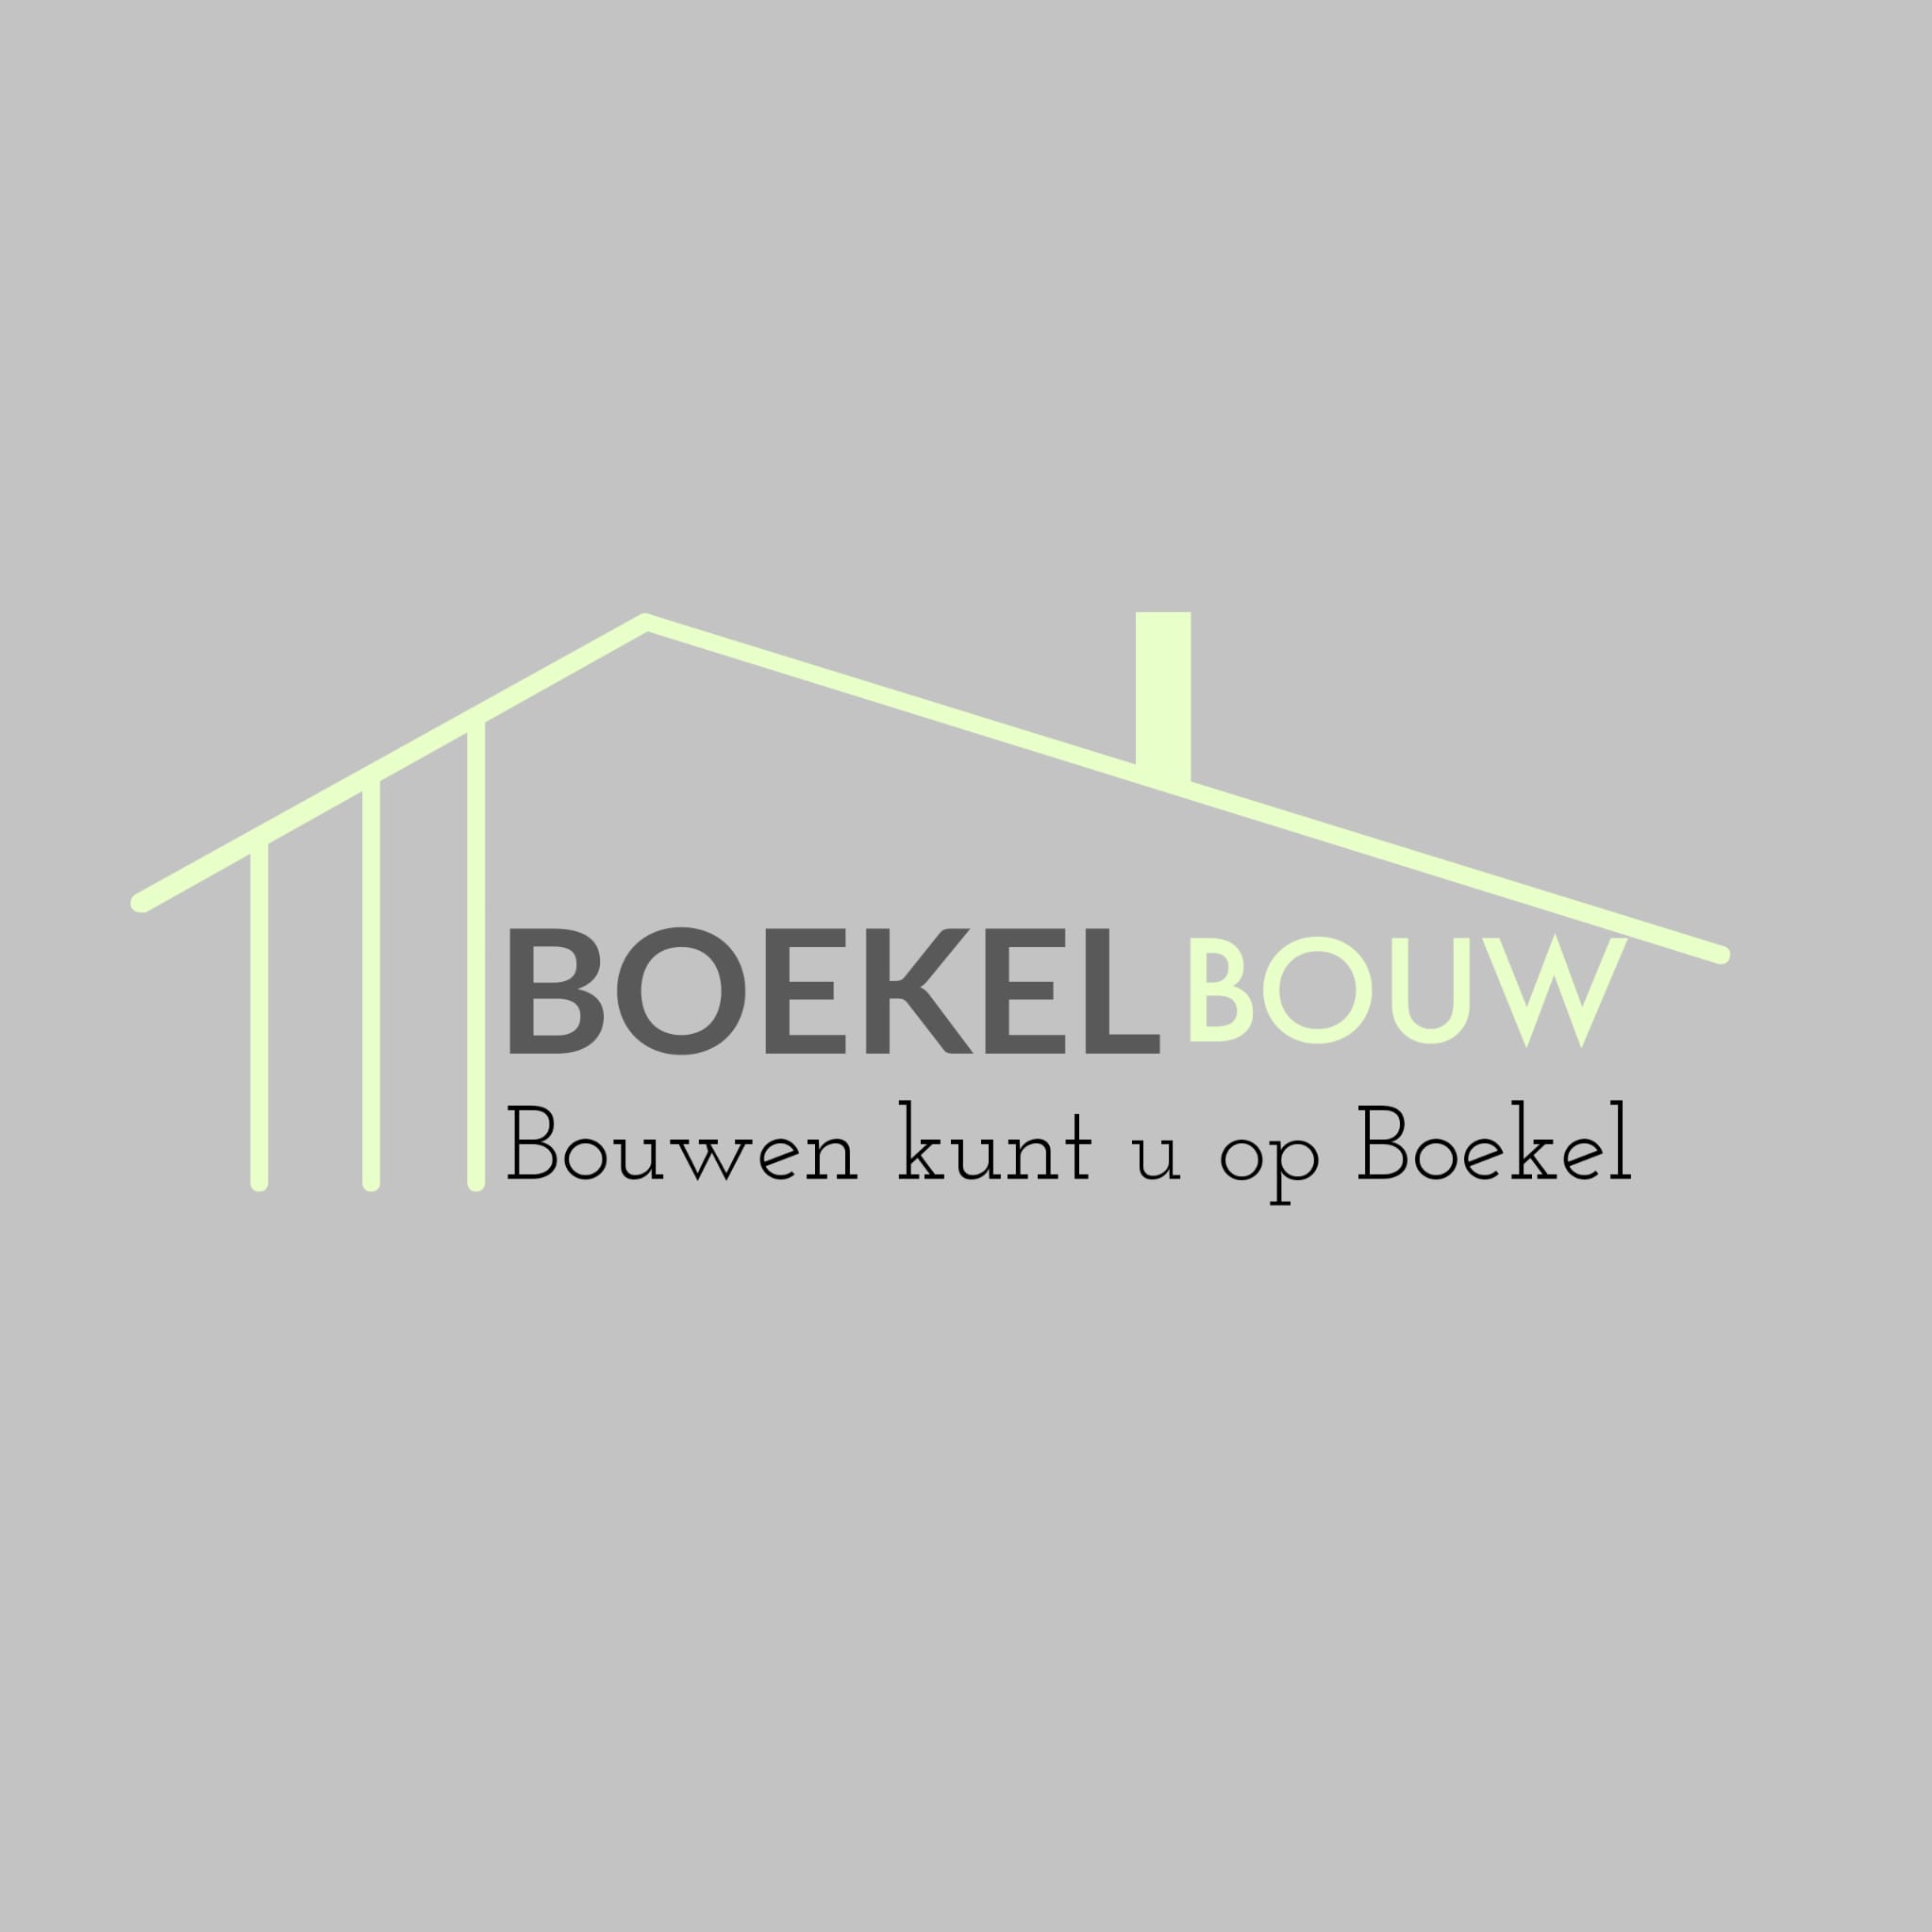 Boekelbouw logo